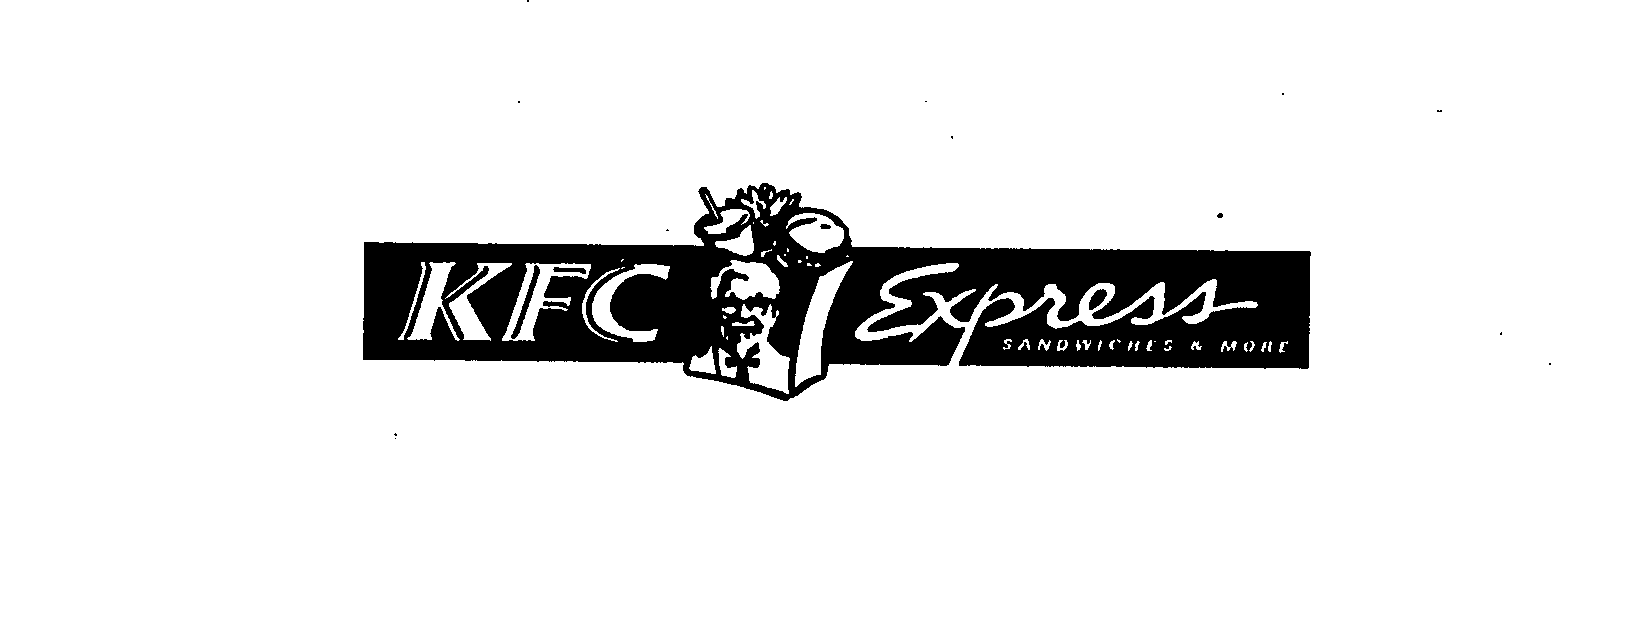  KFC EXPRESS SANDWICHES &amp; MORE